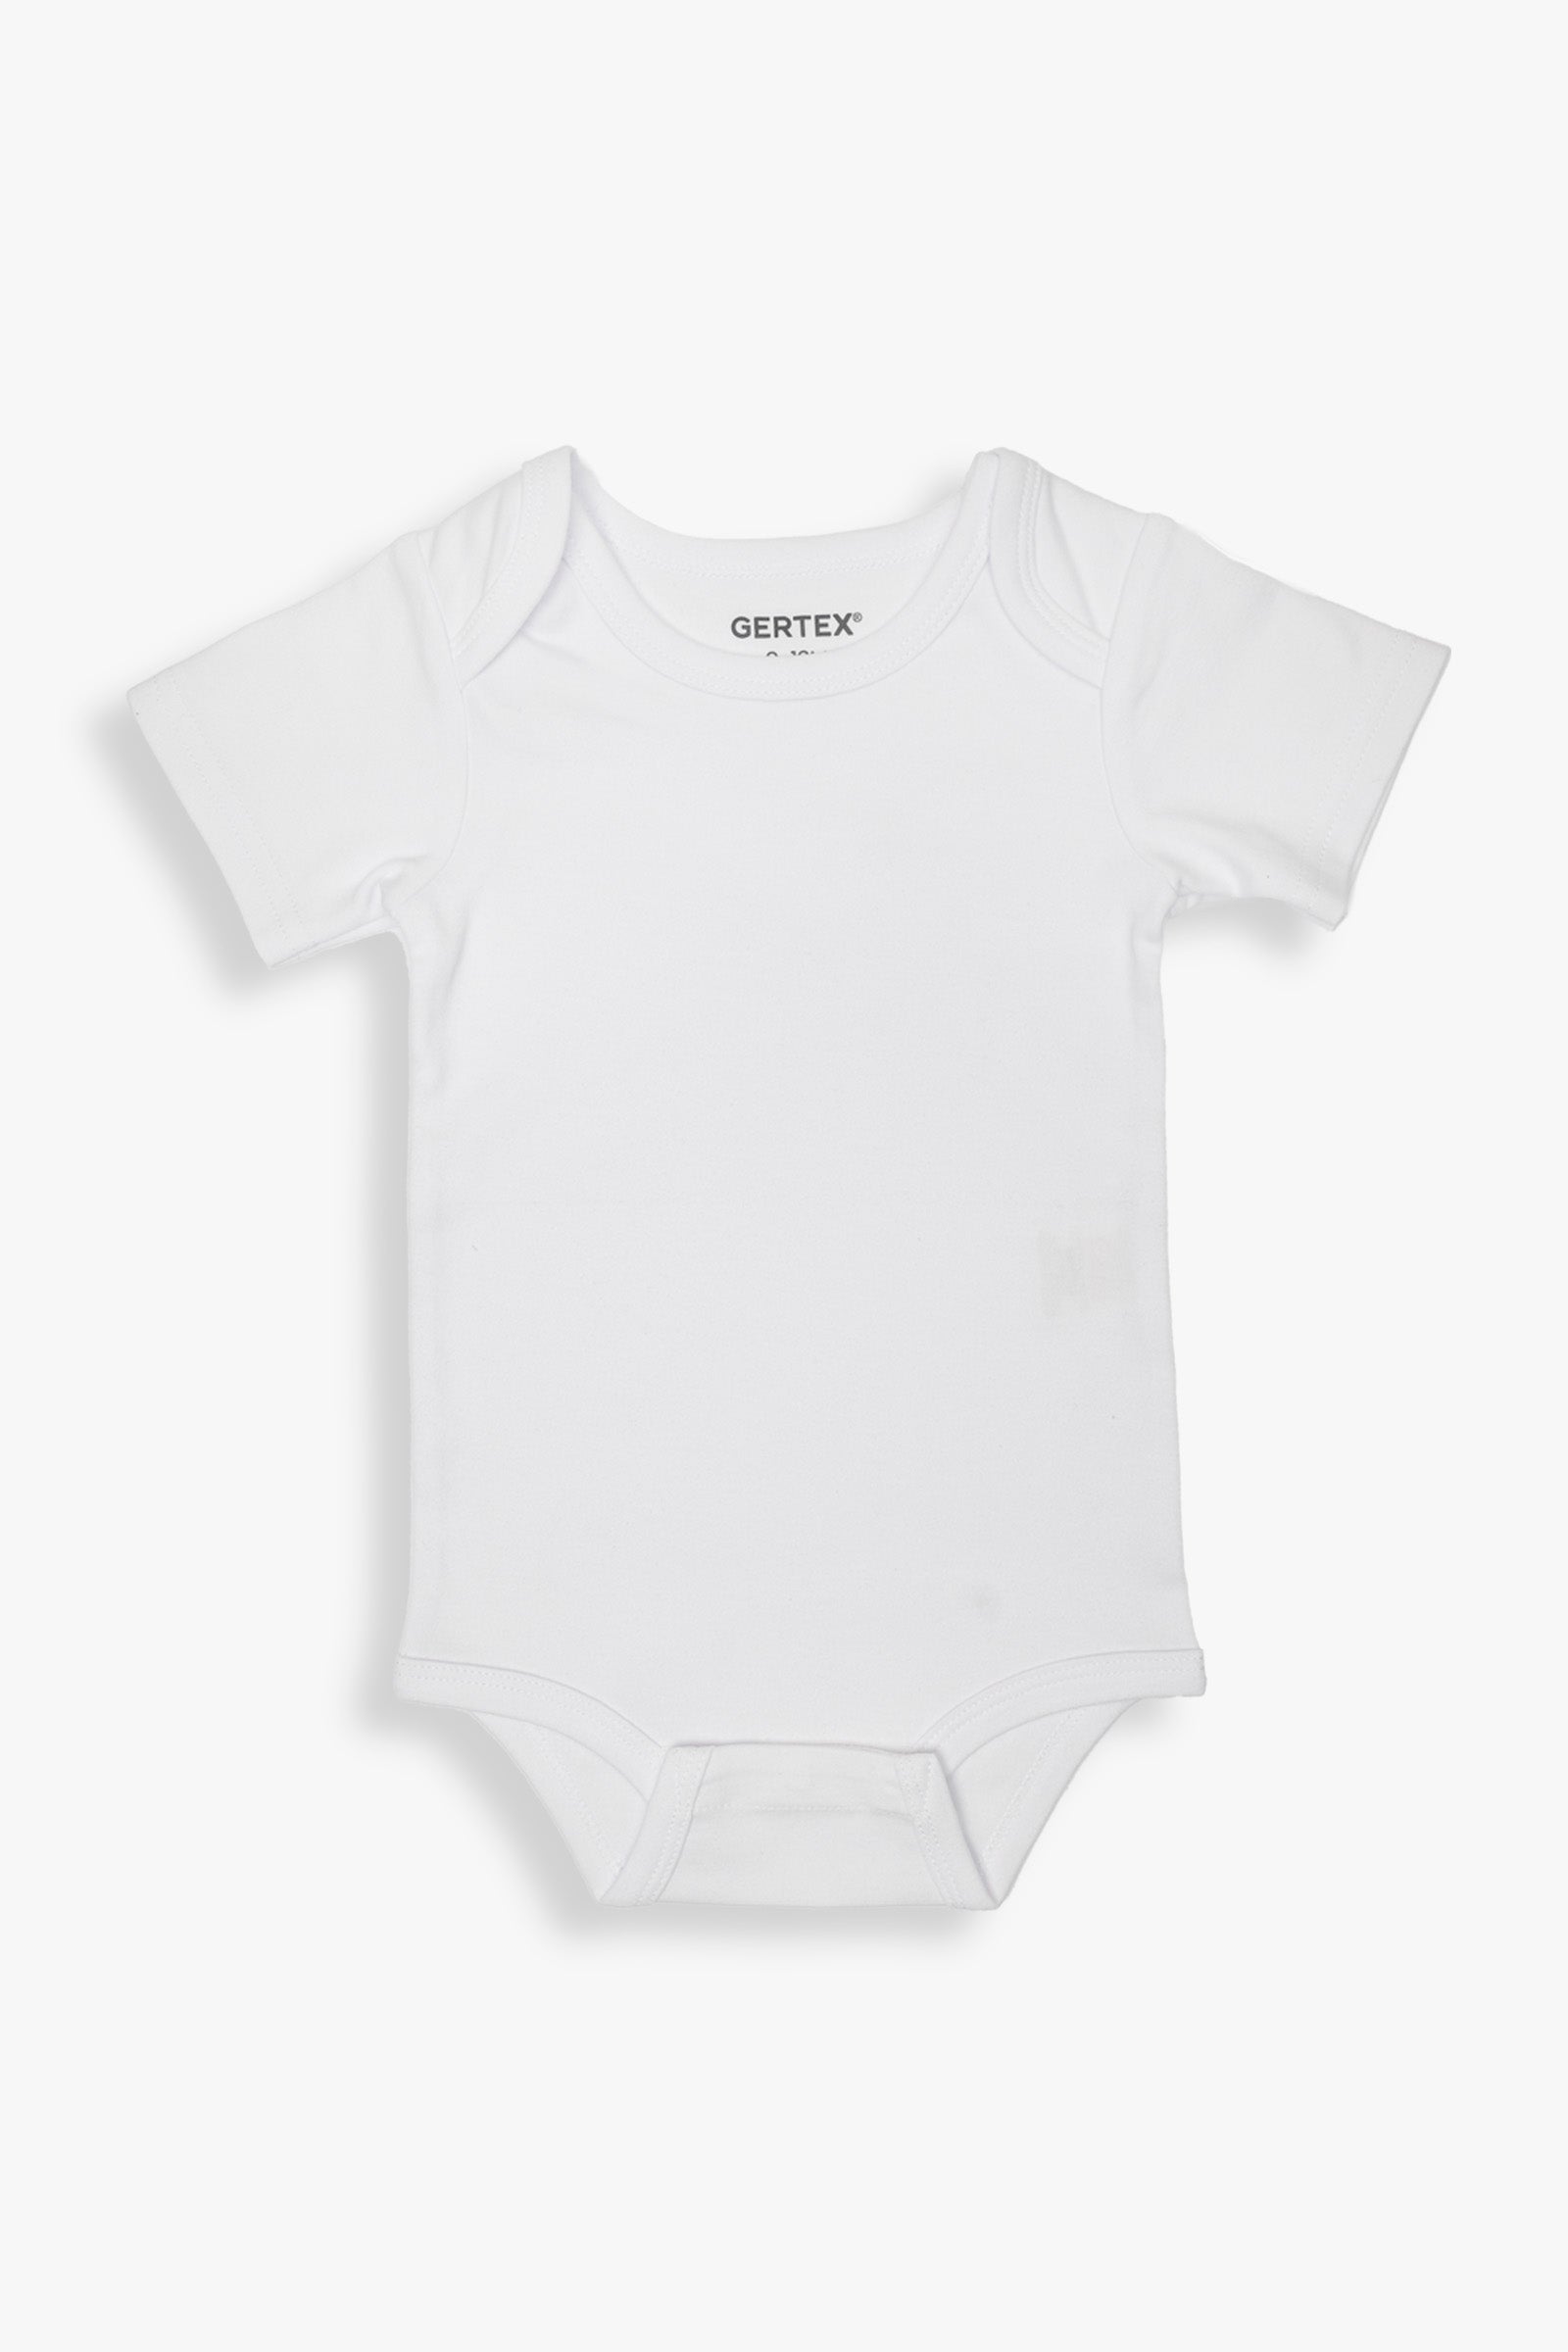 Gertex Unisex Baby Short Sleeve Bodysuit With Snaps Multipack